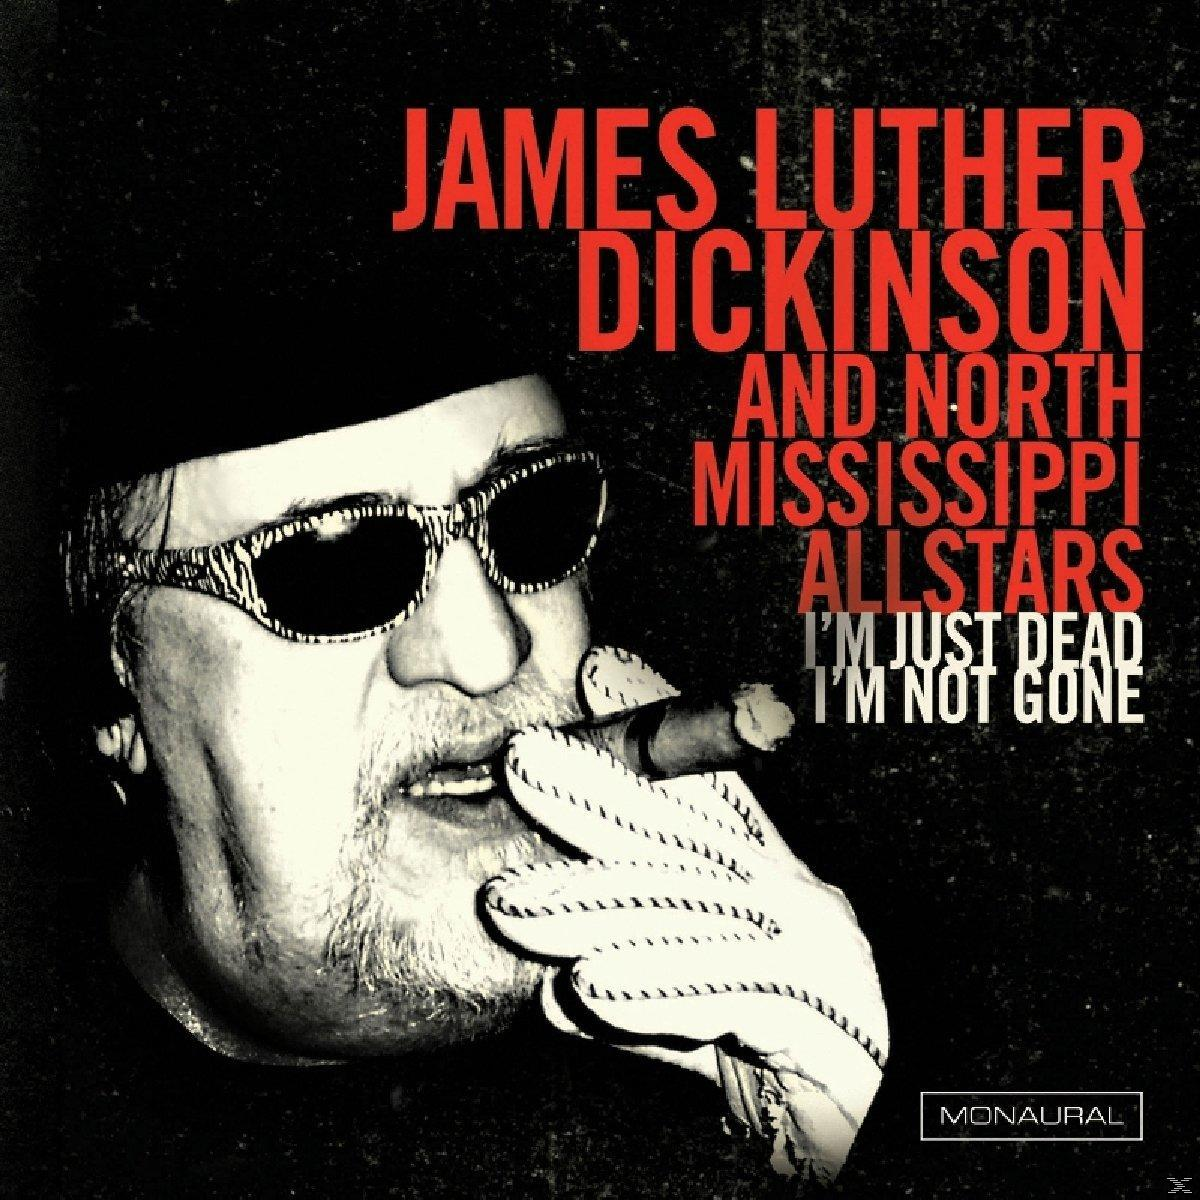 Dead (Vinyl) - Dickinson Not James I\'m Gone I\'m Luther - Just